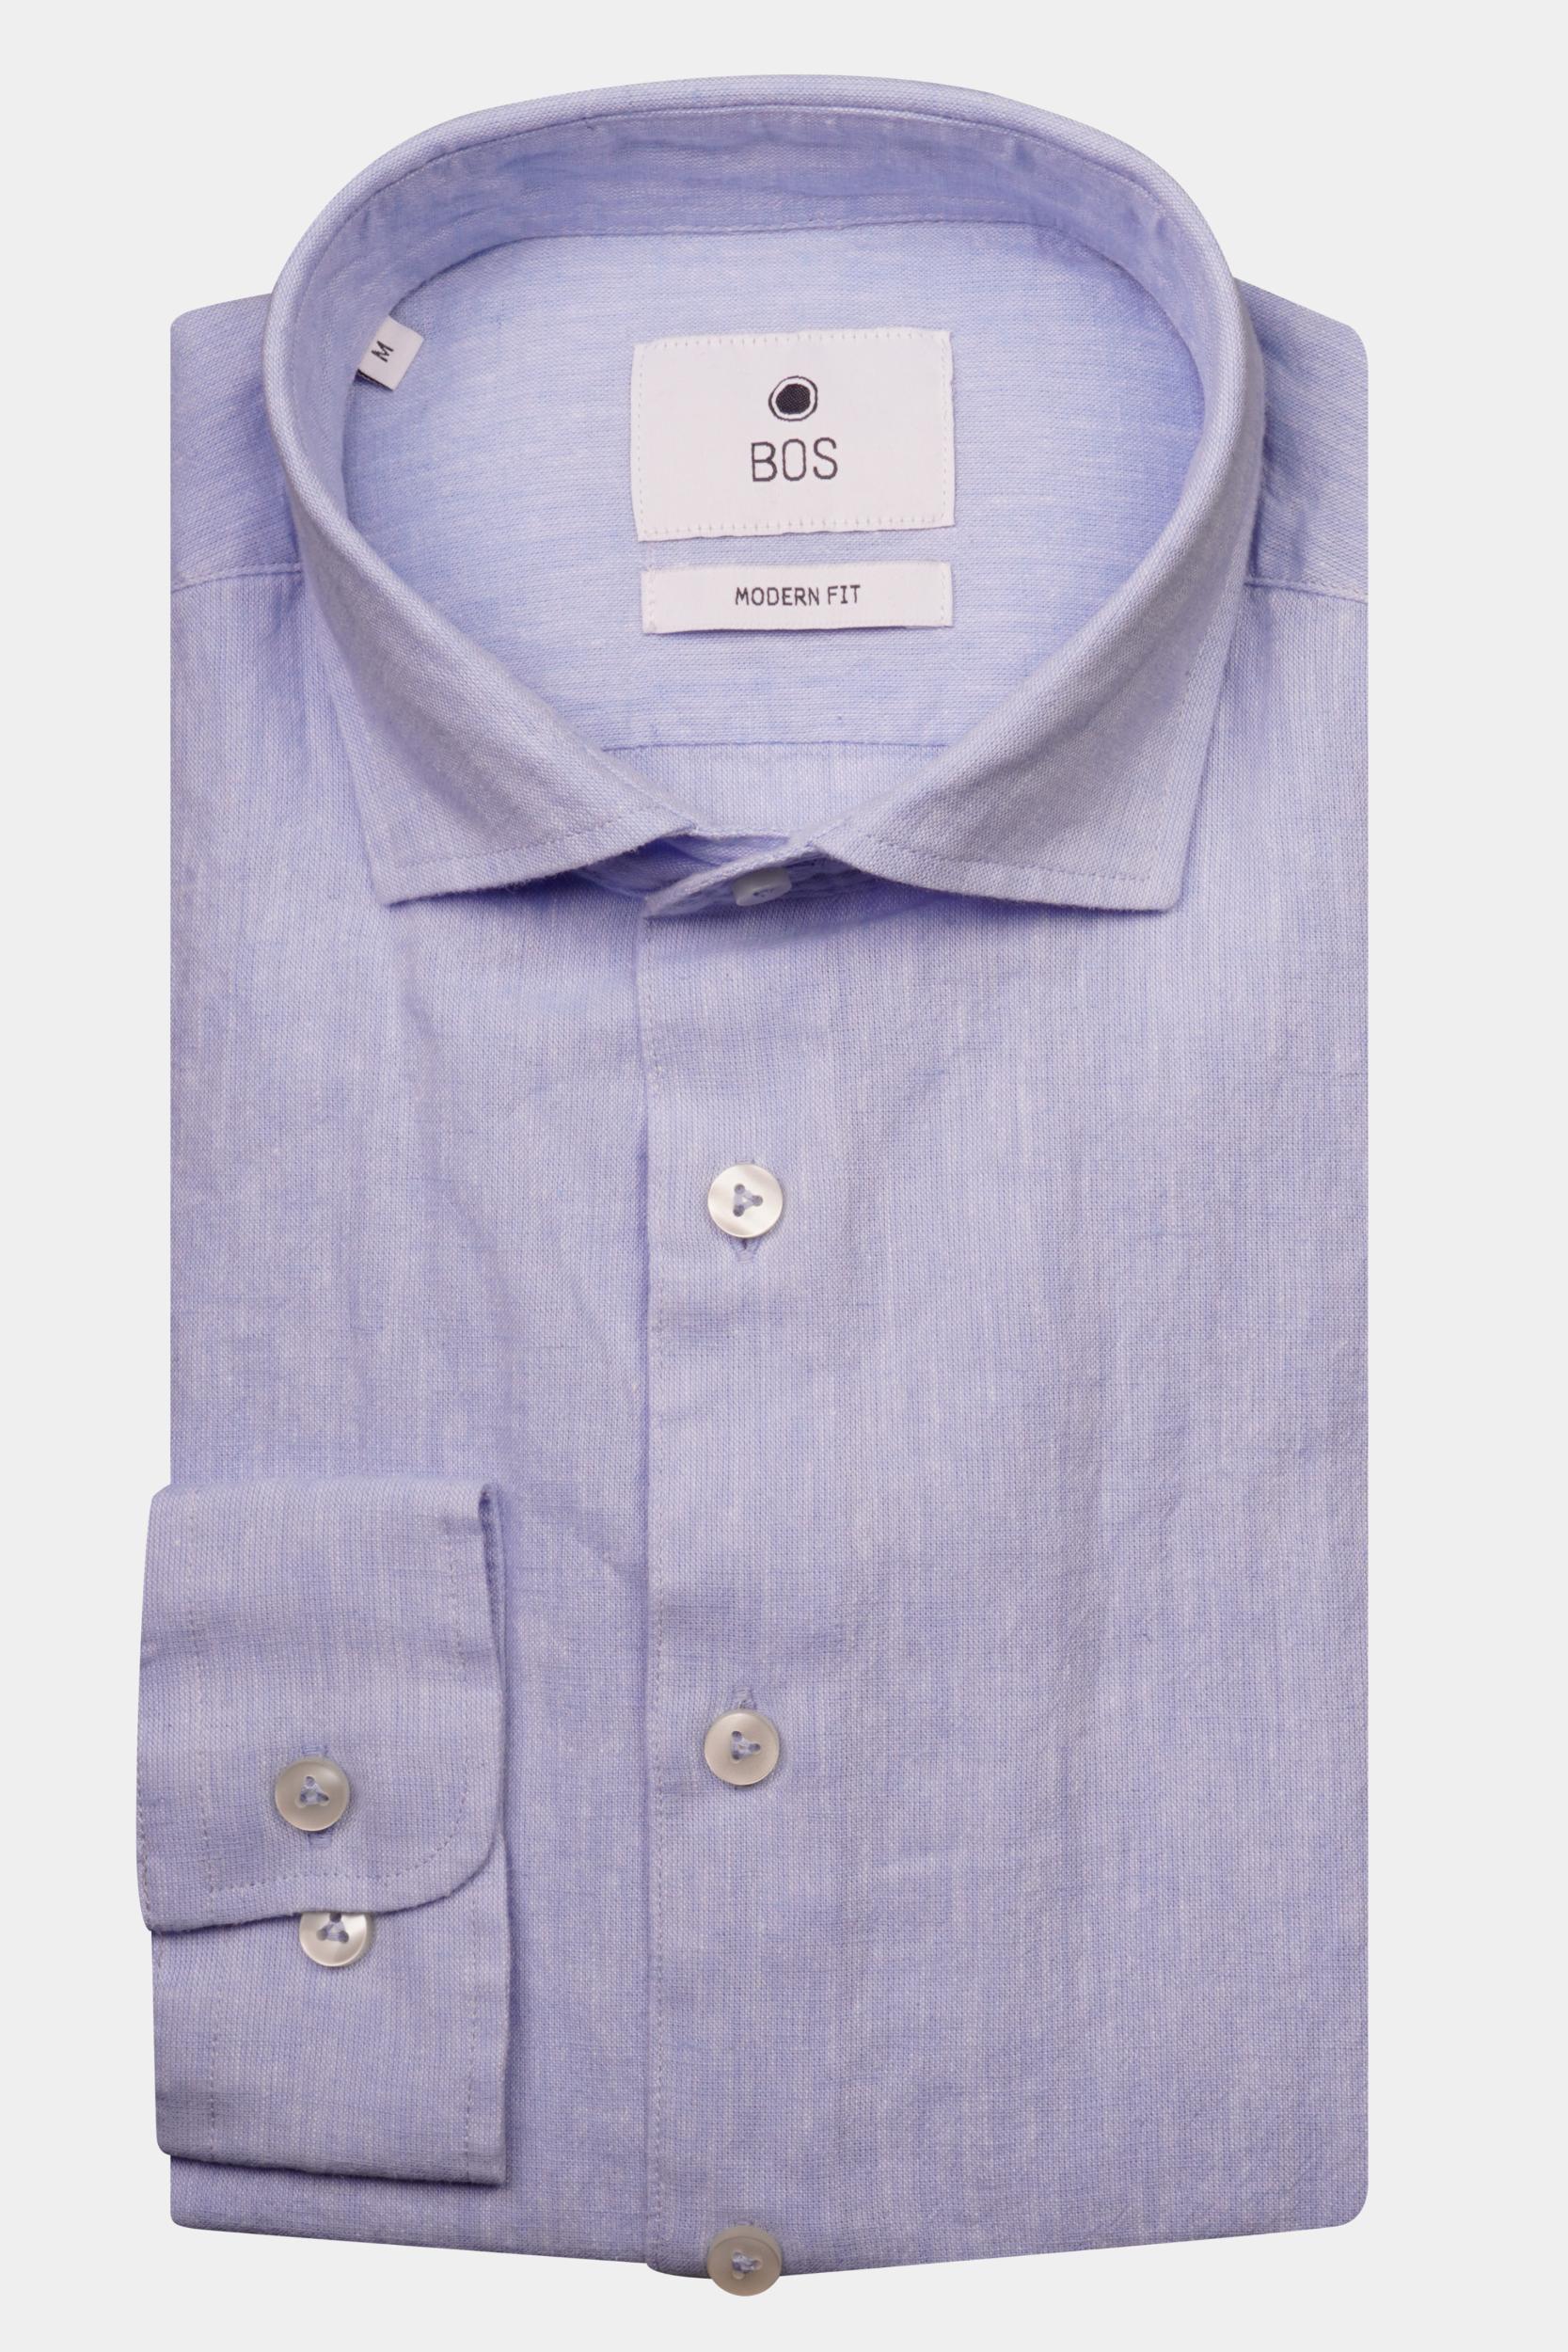 Bos Bright Blue Casual hemd lange mouw Blauw Avenue Co-li-ws Plain Shirt L 23107AV01BO/210 l.blue